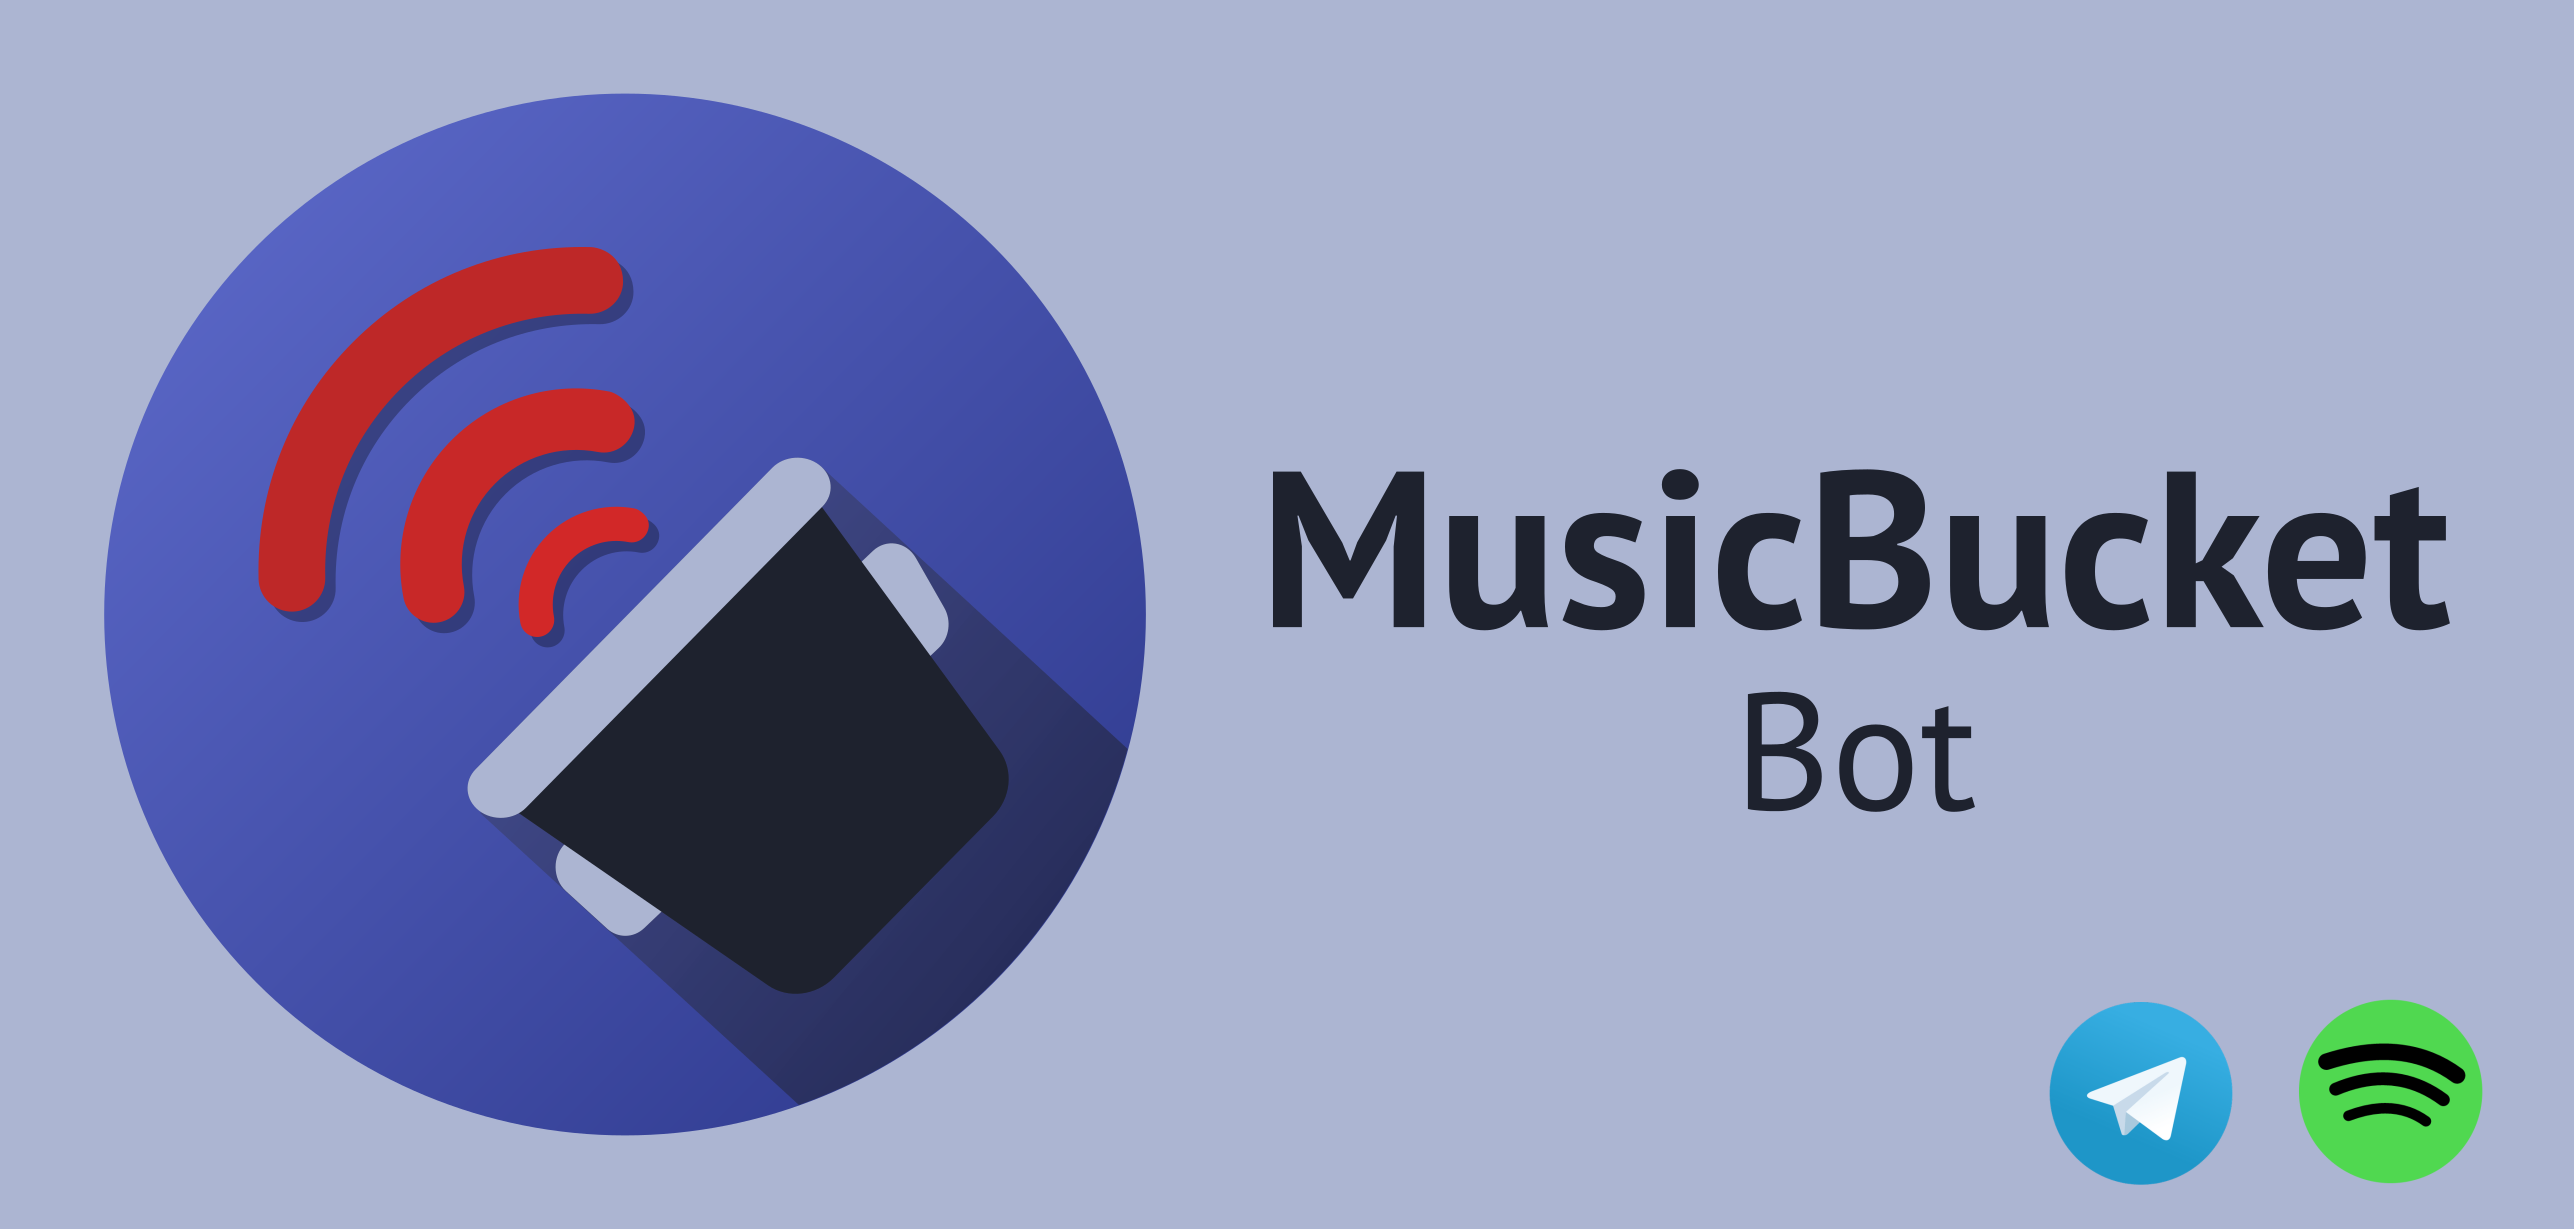 musicbucket_bot_letter_logo_1229x2574.png